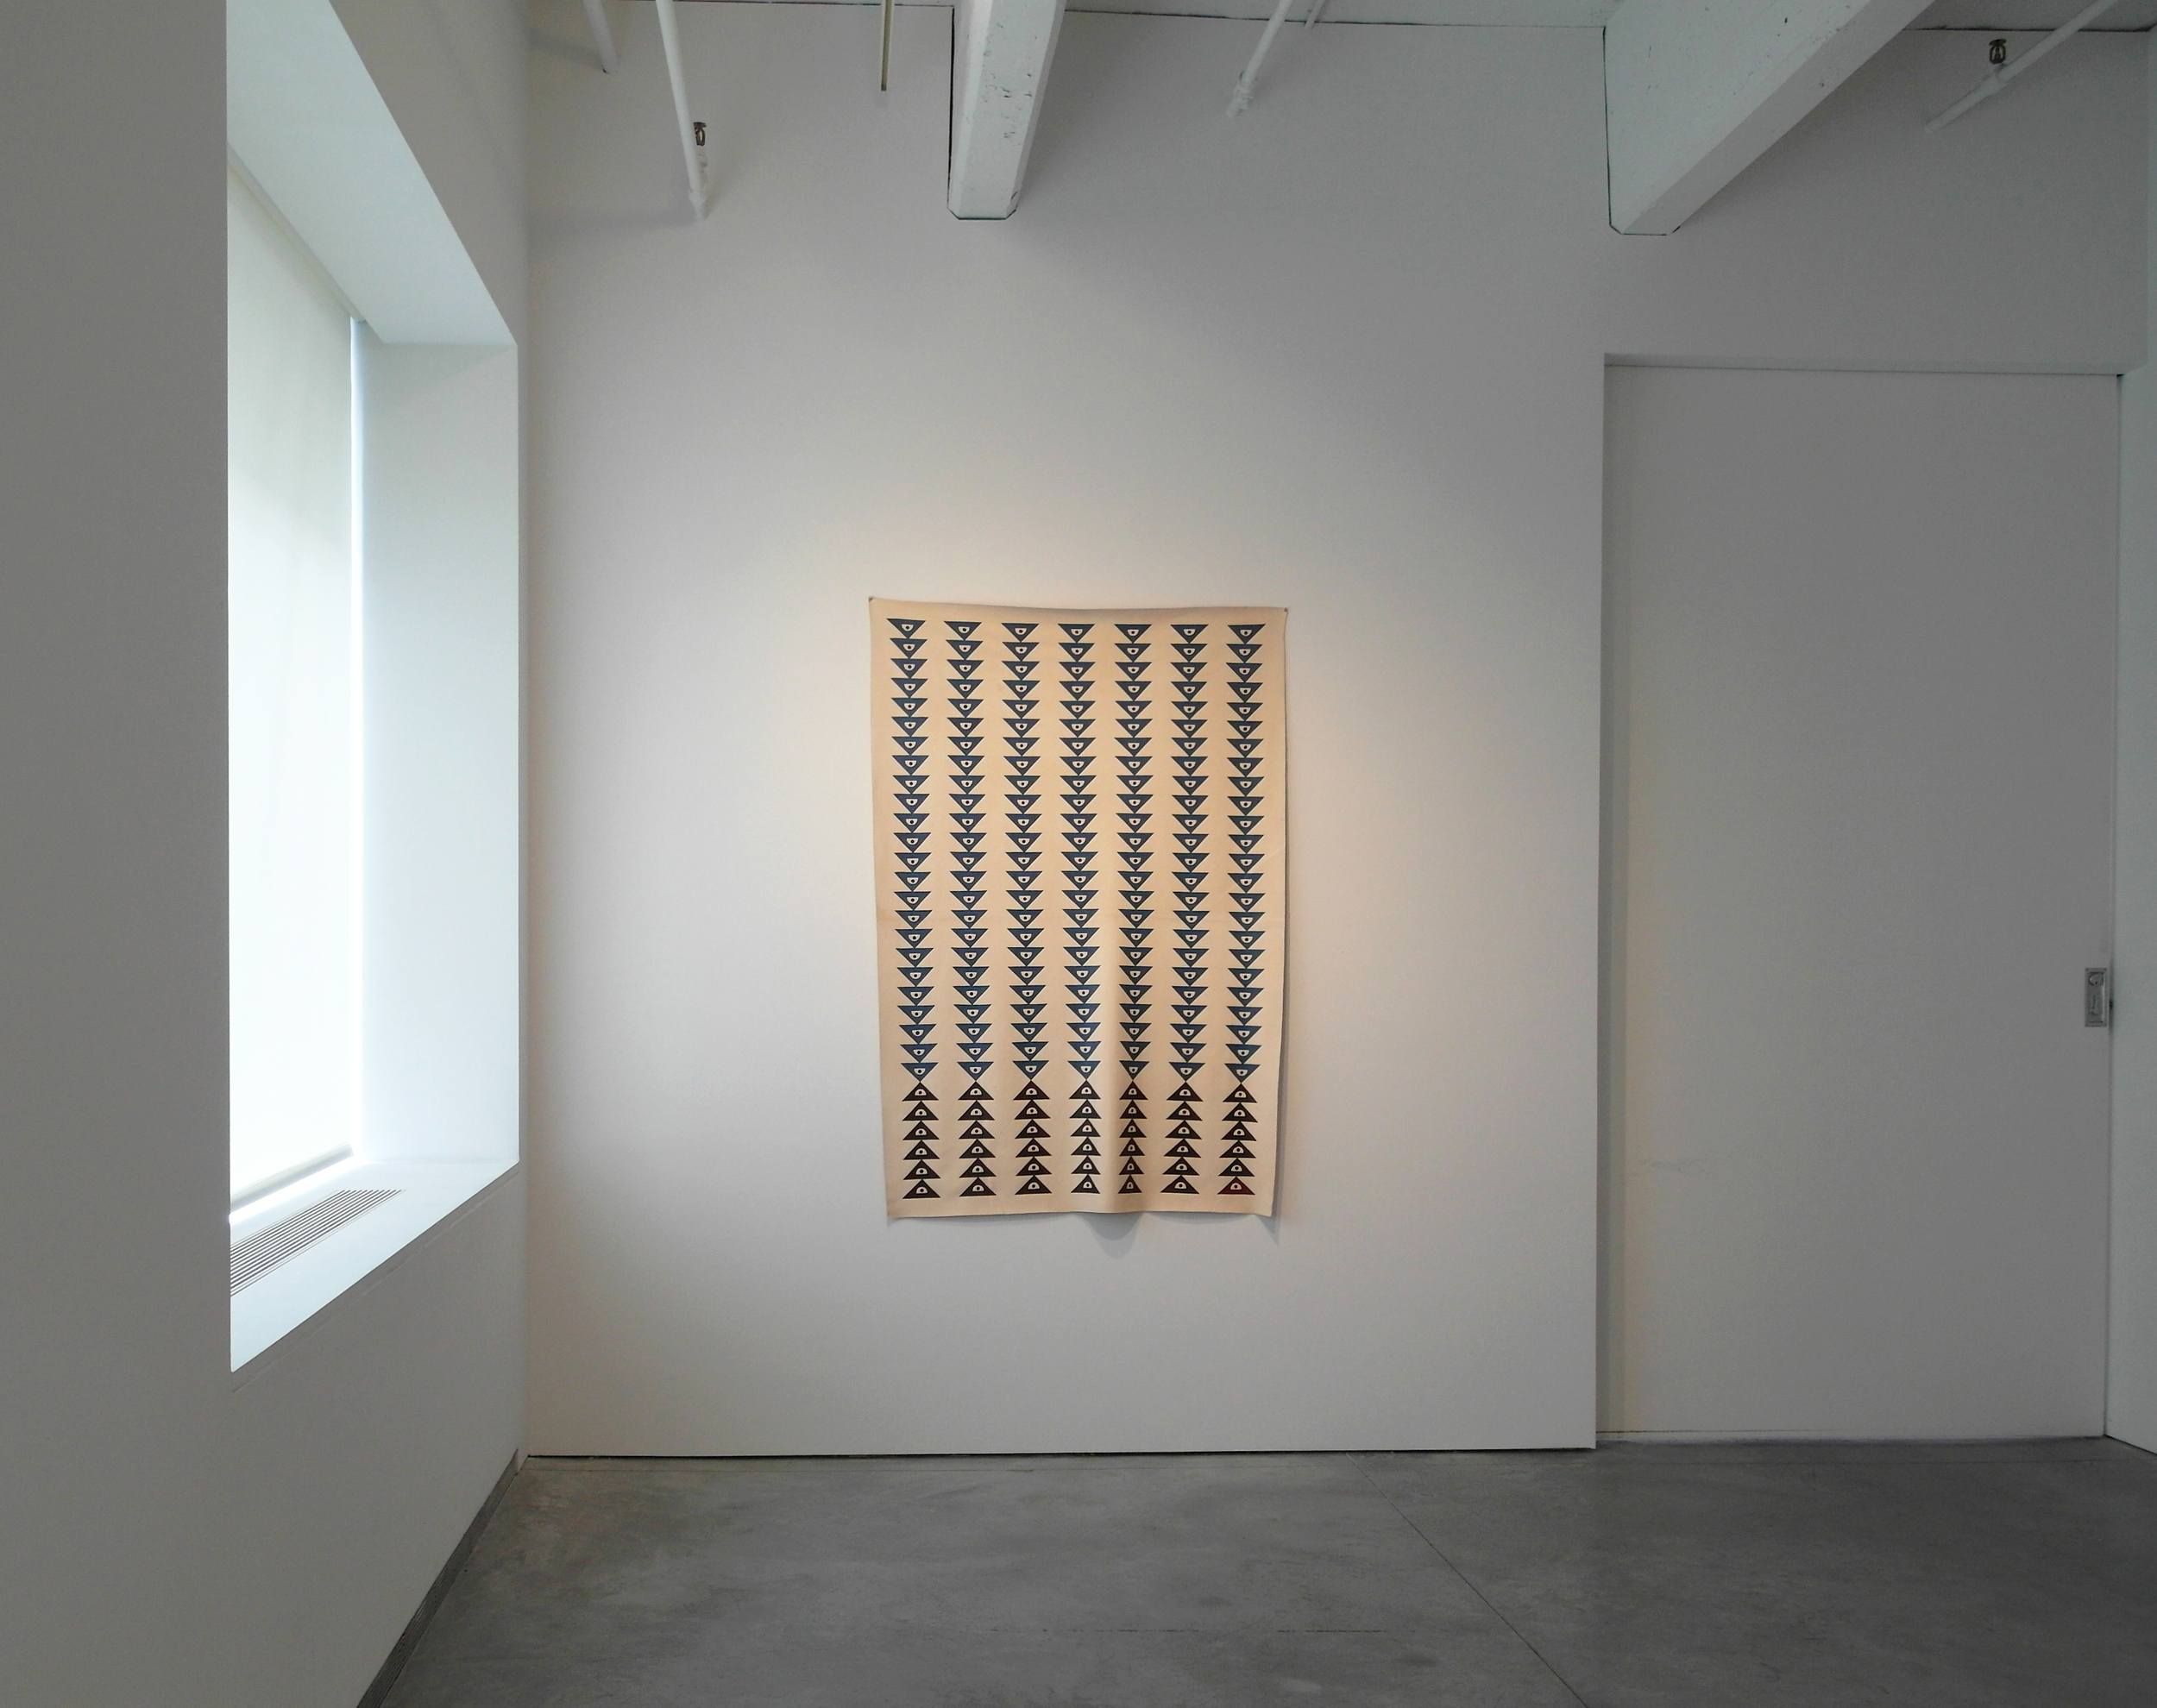   Hourglass    (solo exhibition)  Tracy Williams Ltd, New York, 2012 